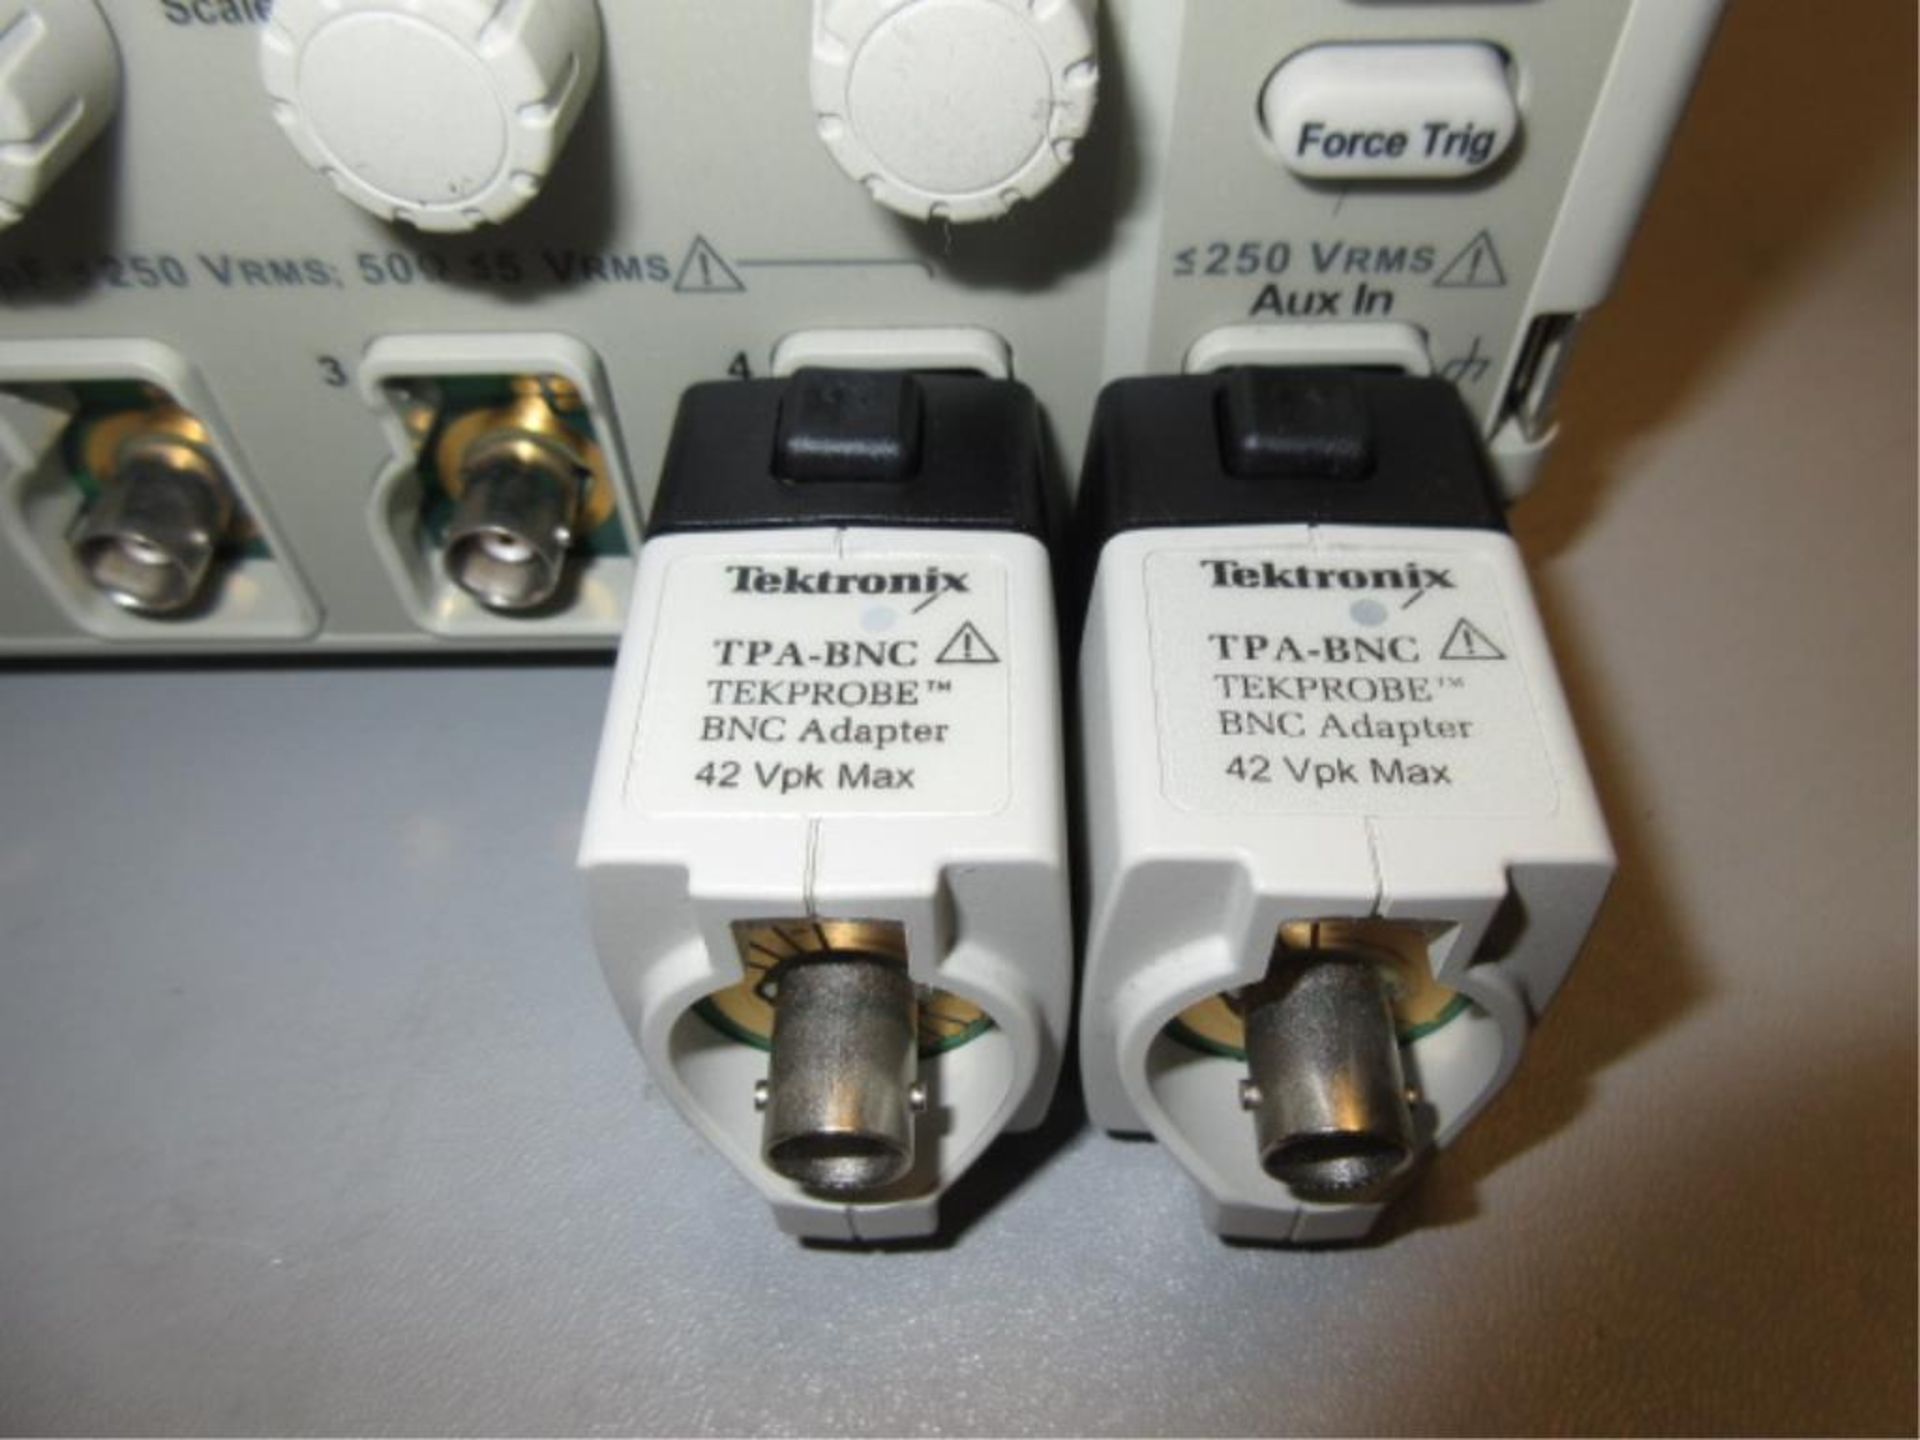 Tektronix DPO 4104 Digital Phosphor Oscilloscope. Digital Phosphor Oscilloscope, 1GHz 5 GS/s SN# - Image 2 of 4